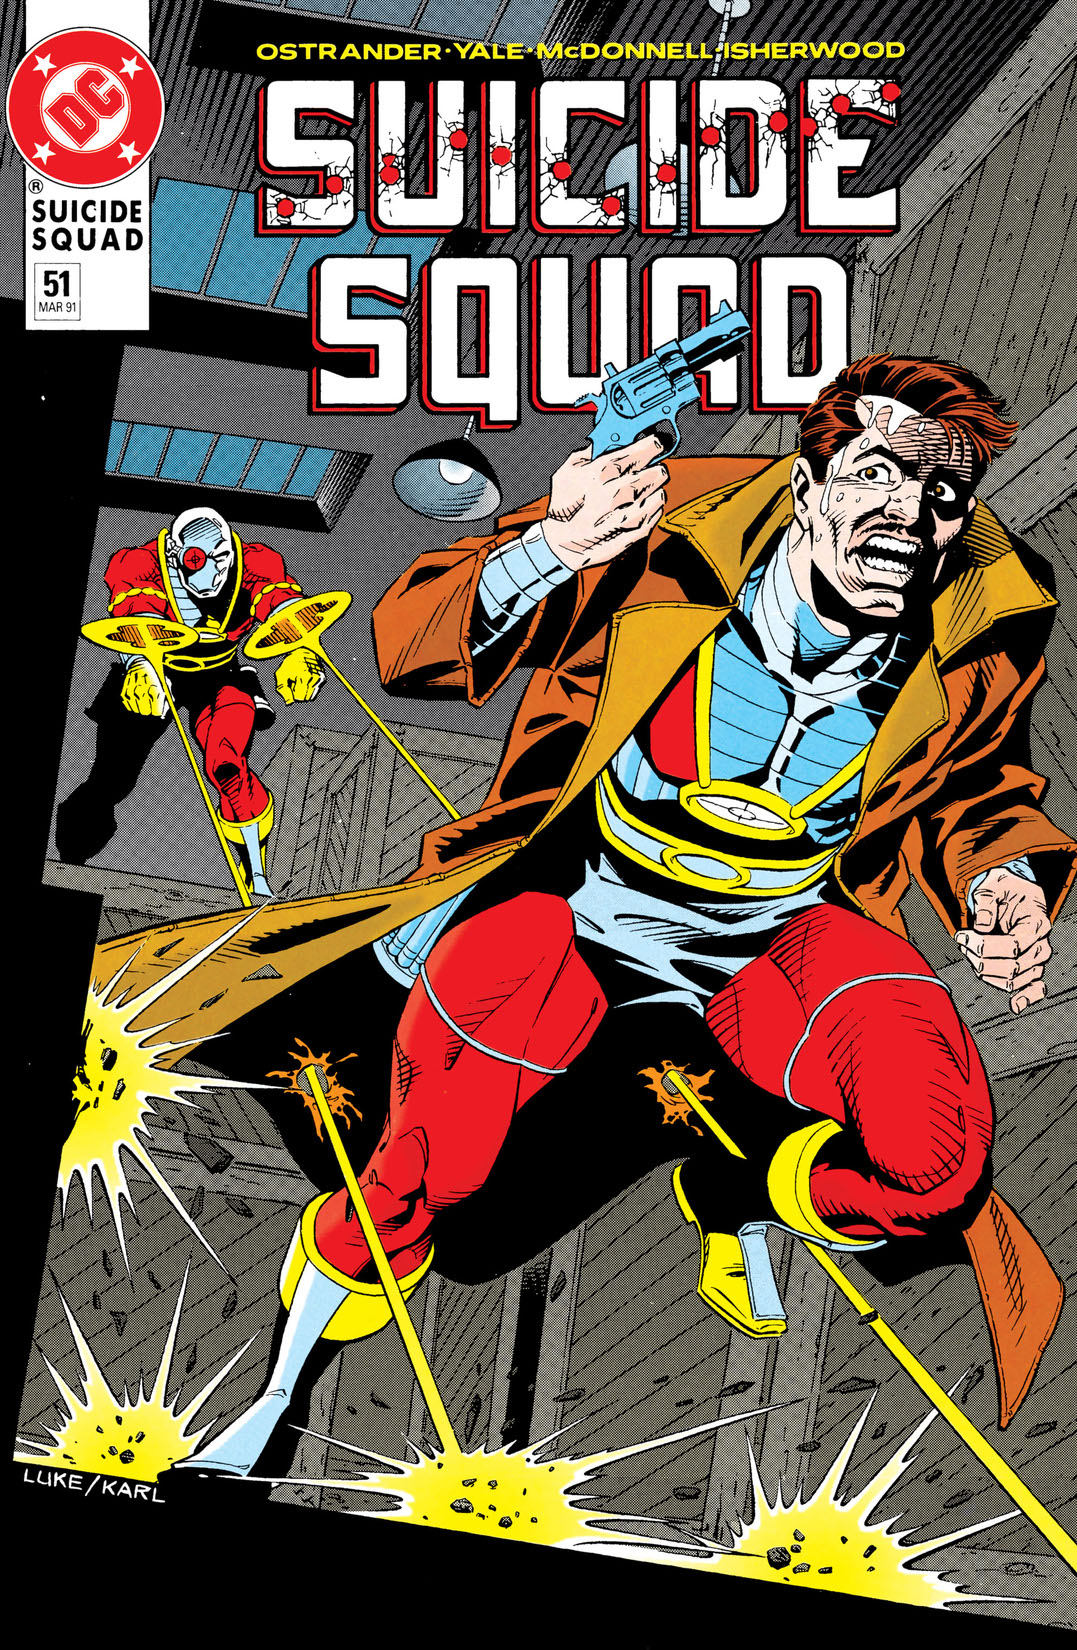 Suicide Squad (1987-2010) #51 preview images